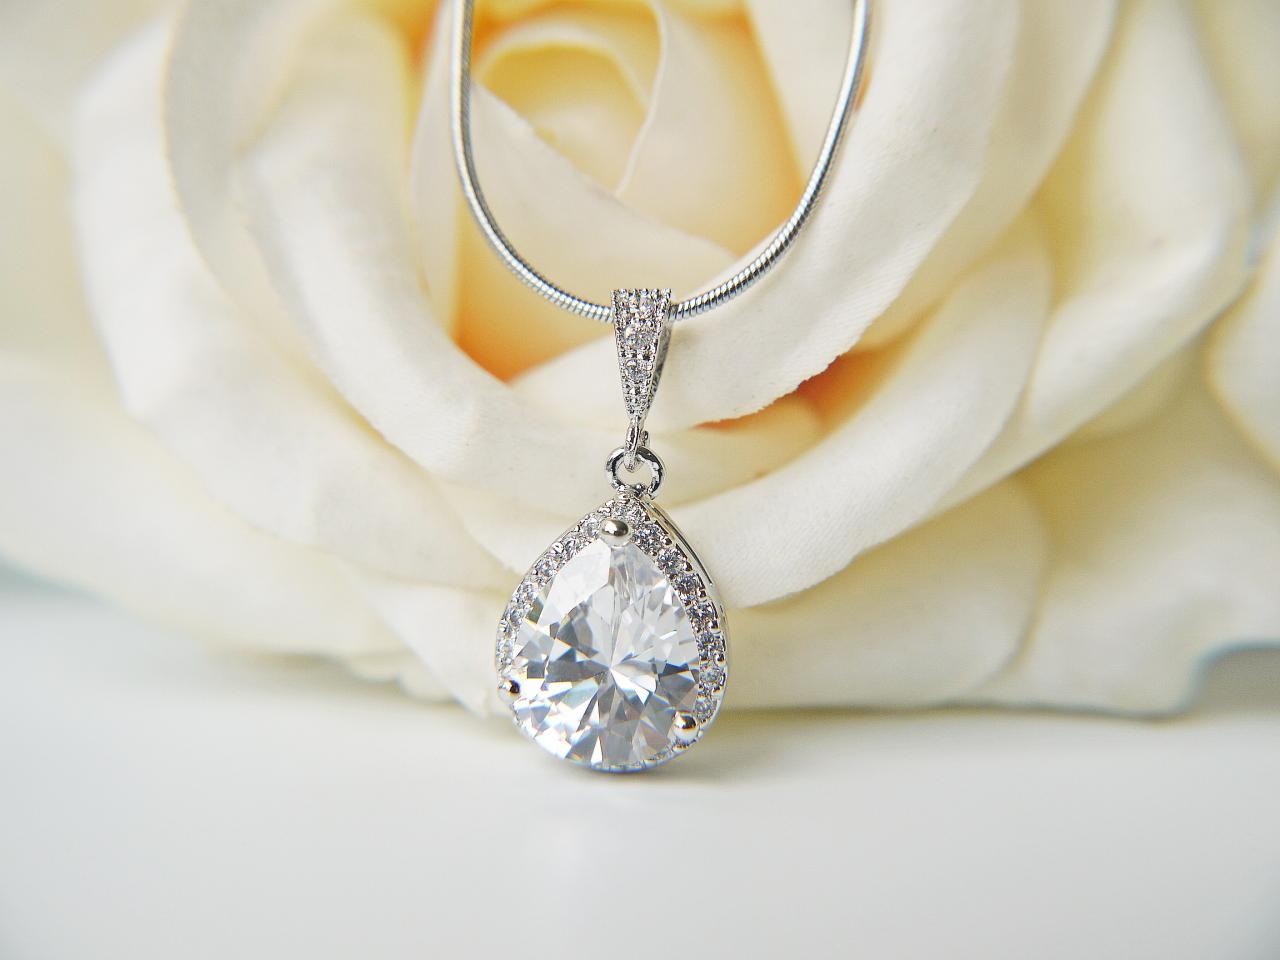 Wedding Bridal Jewelry Cubic Zirconia Necklcace. Silver Glamorous Classy Elegant Modern Teardroppendant